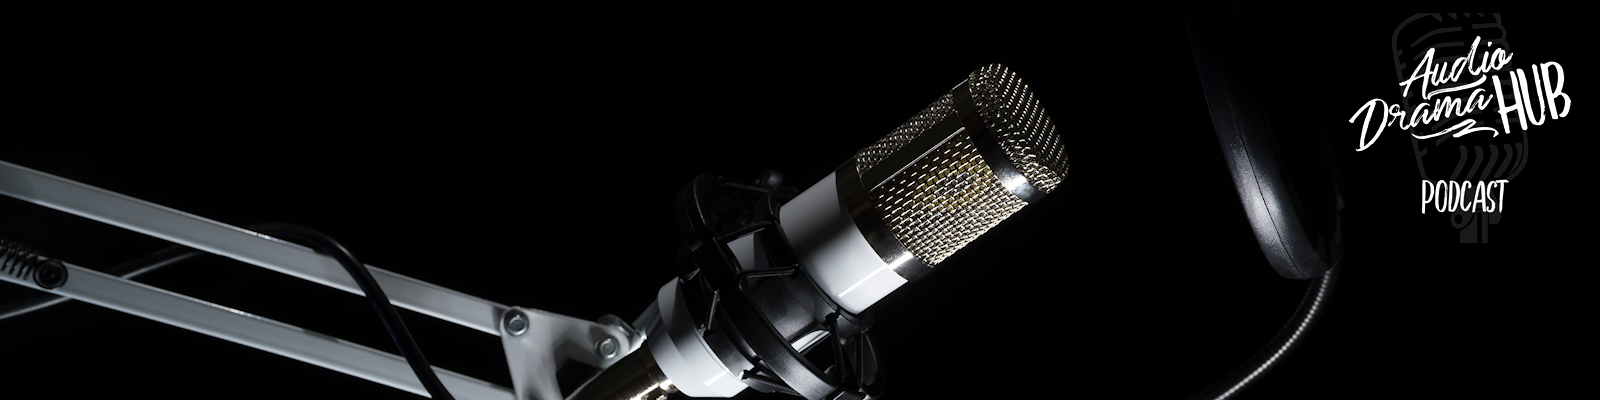 The Audio Drama Hub Podcast